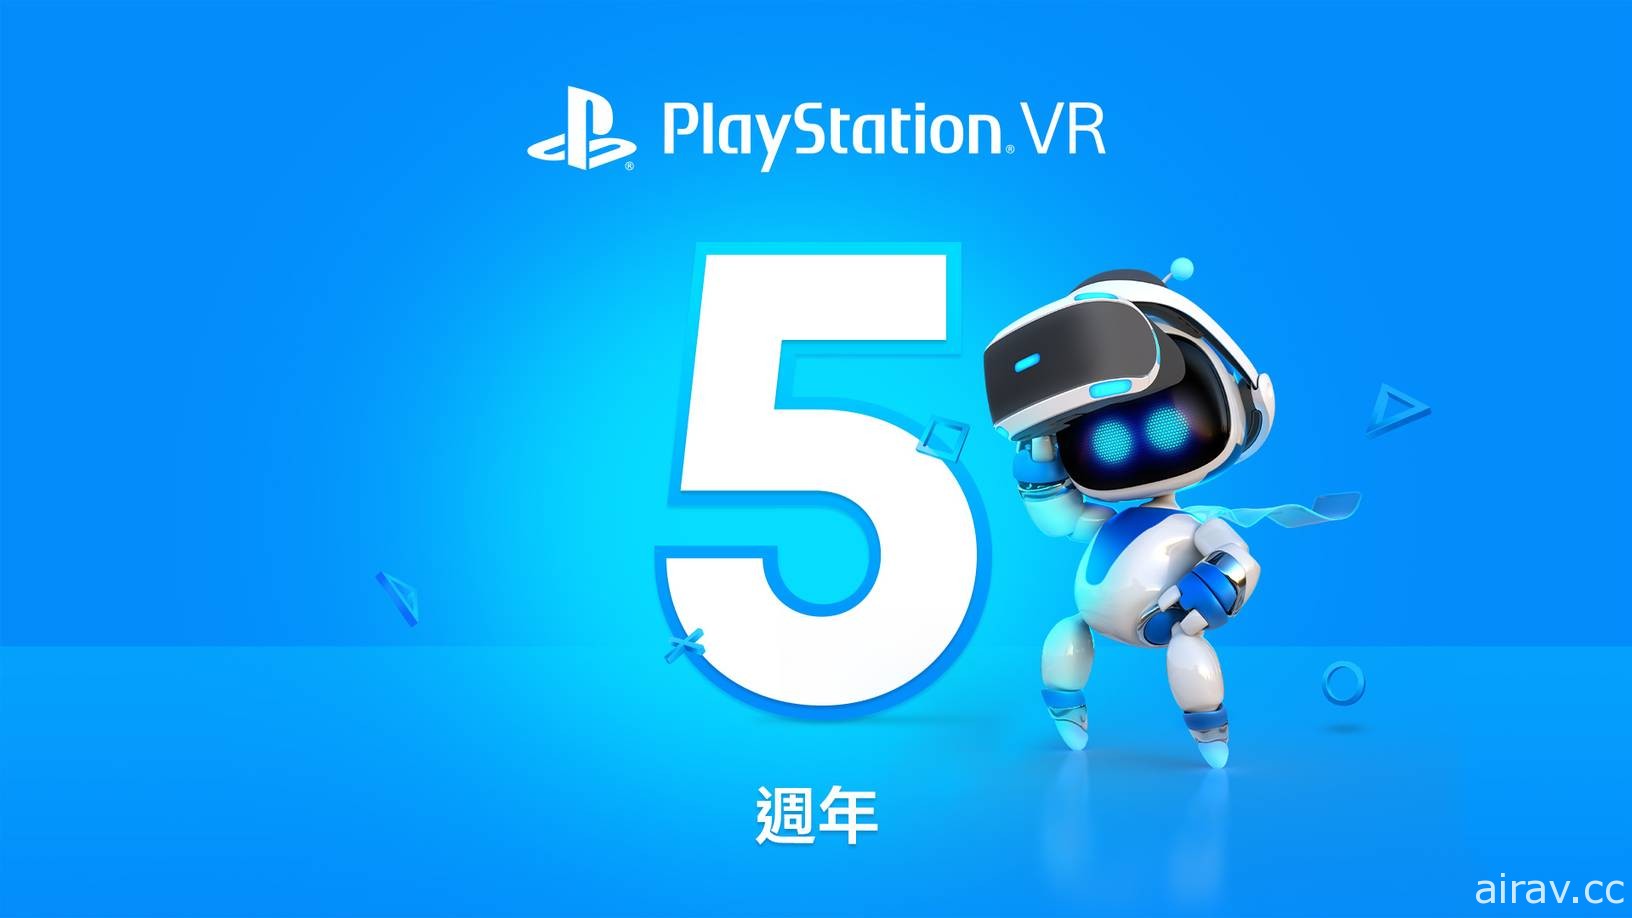 PS4 虛擬實境裝置 PlayStation VR 迎接上市 5 周年 將免費提供 PS+ 會員 2 款 PS VR 遊戲